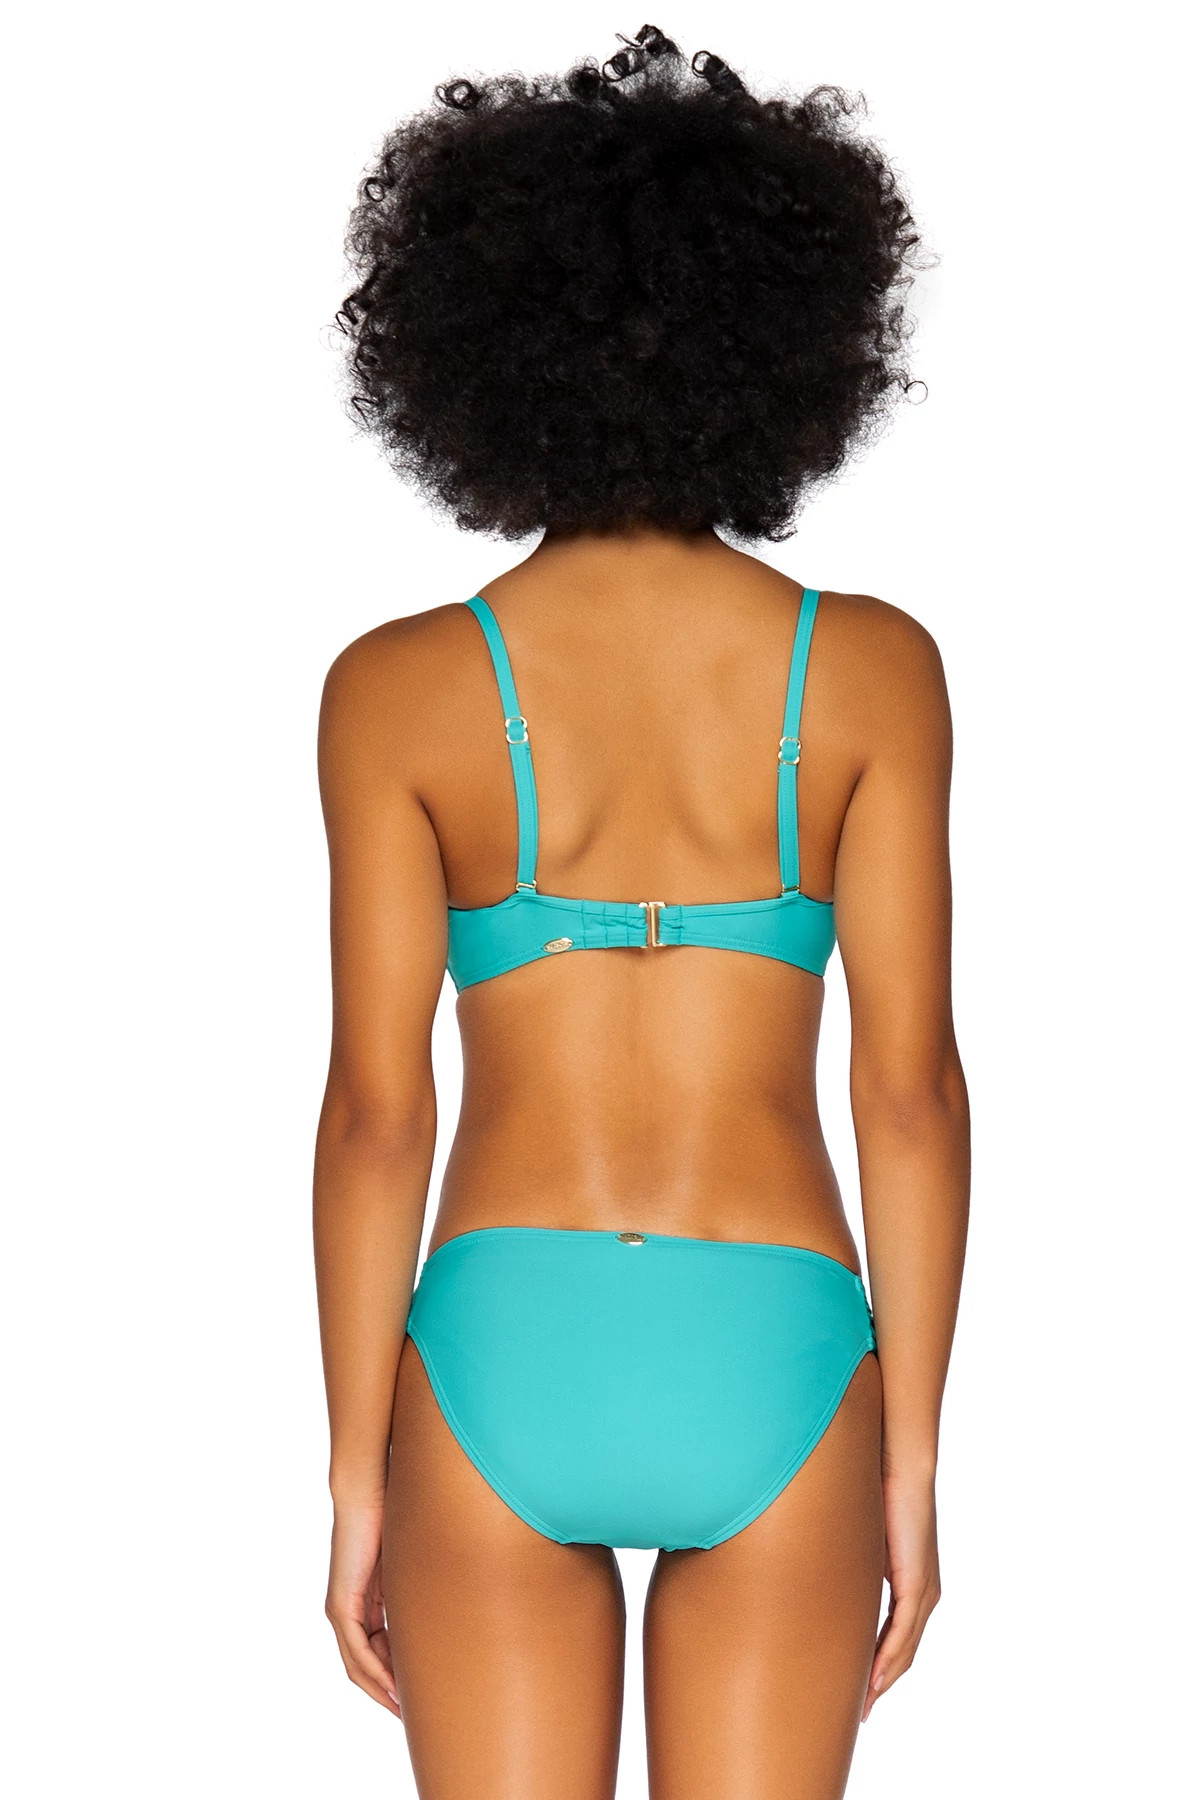 SEASIDE AQUA Iconic Twist Underwire Bandeau Bikini Top (E-H Cup) image number 2